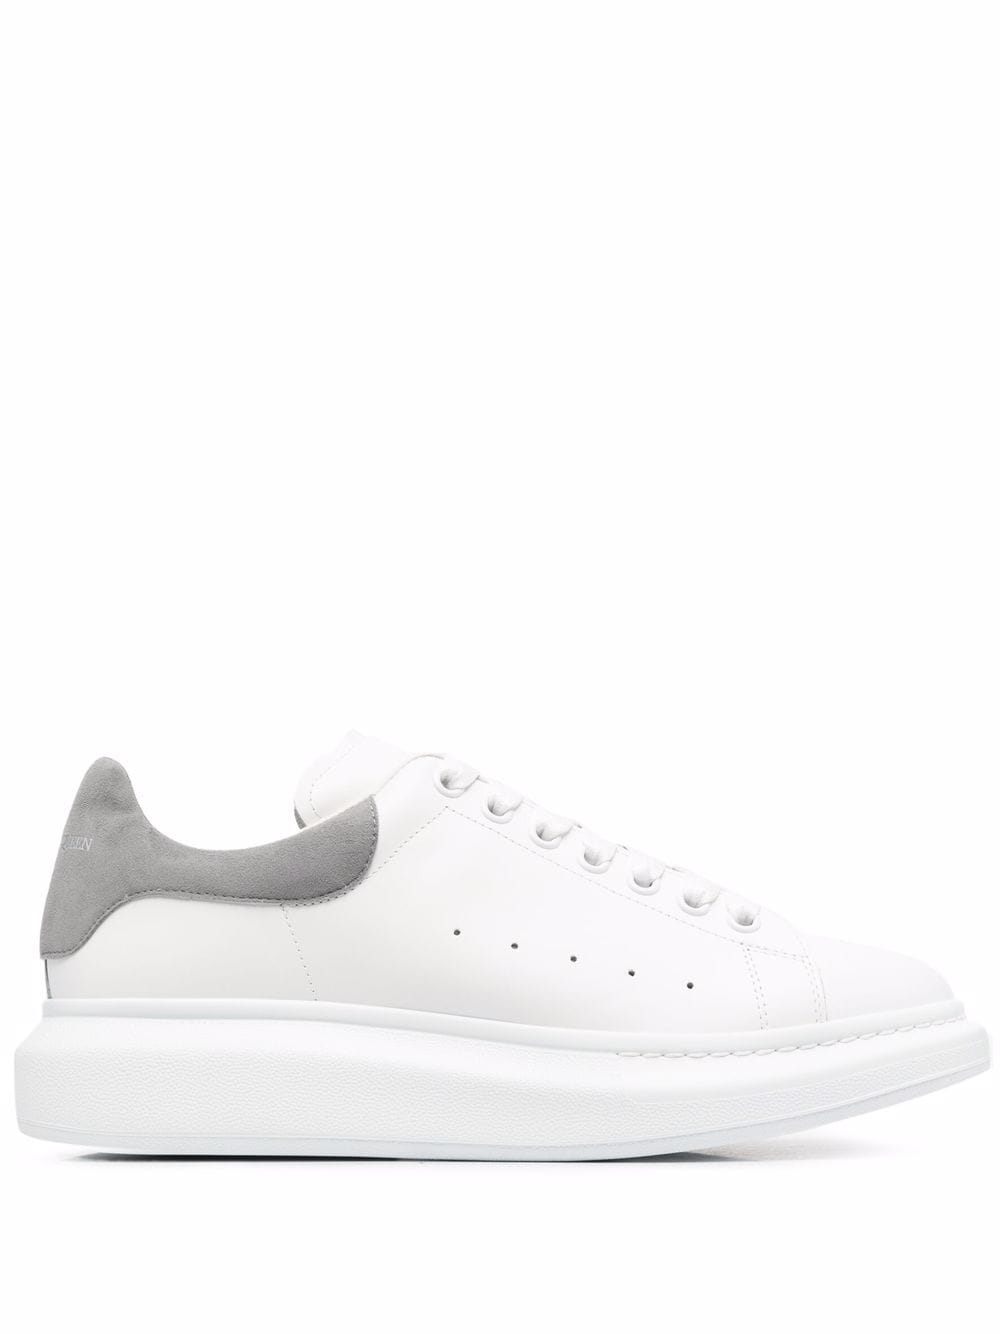 ALEXANDER MCQUEEN Oversized Sole Sneakers White/Grey